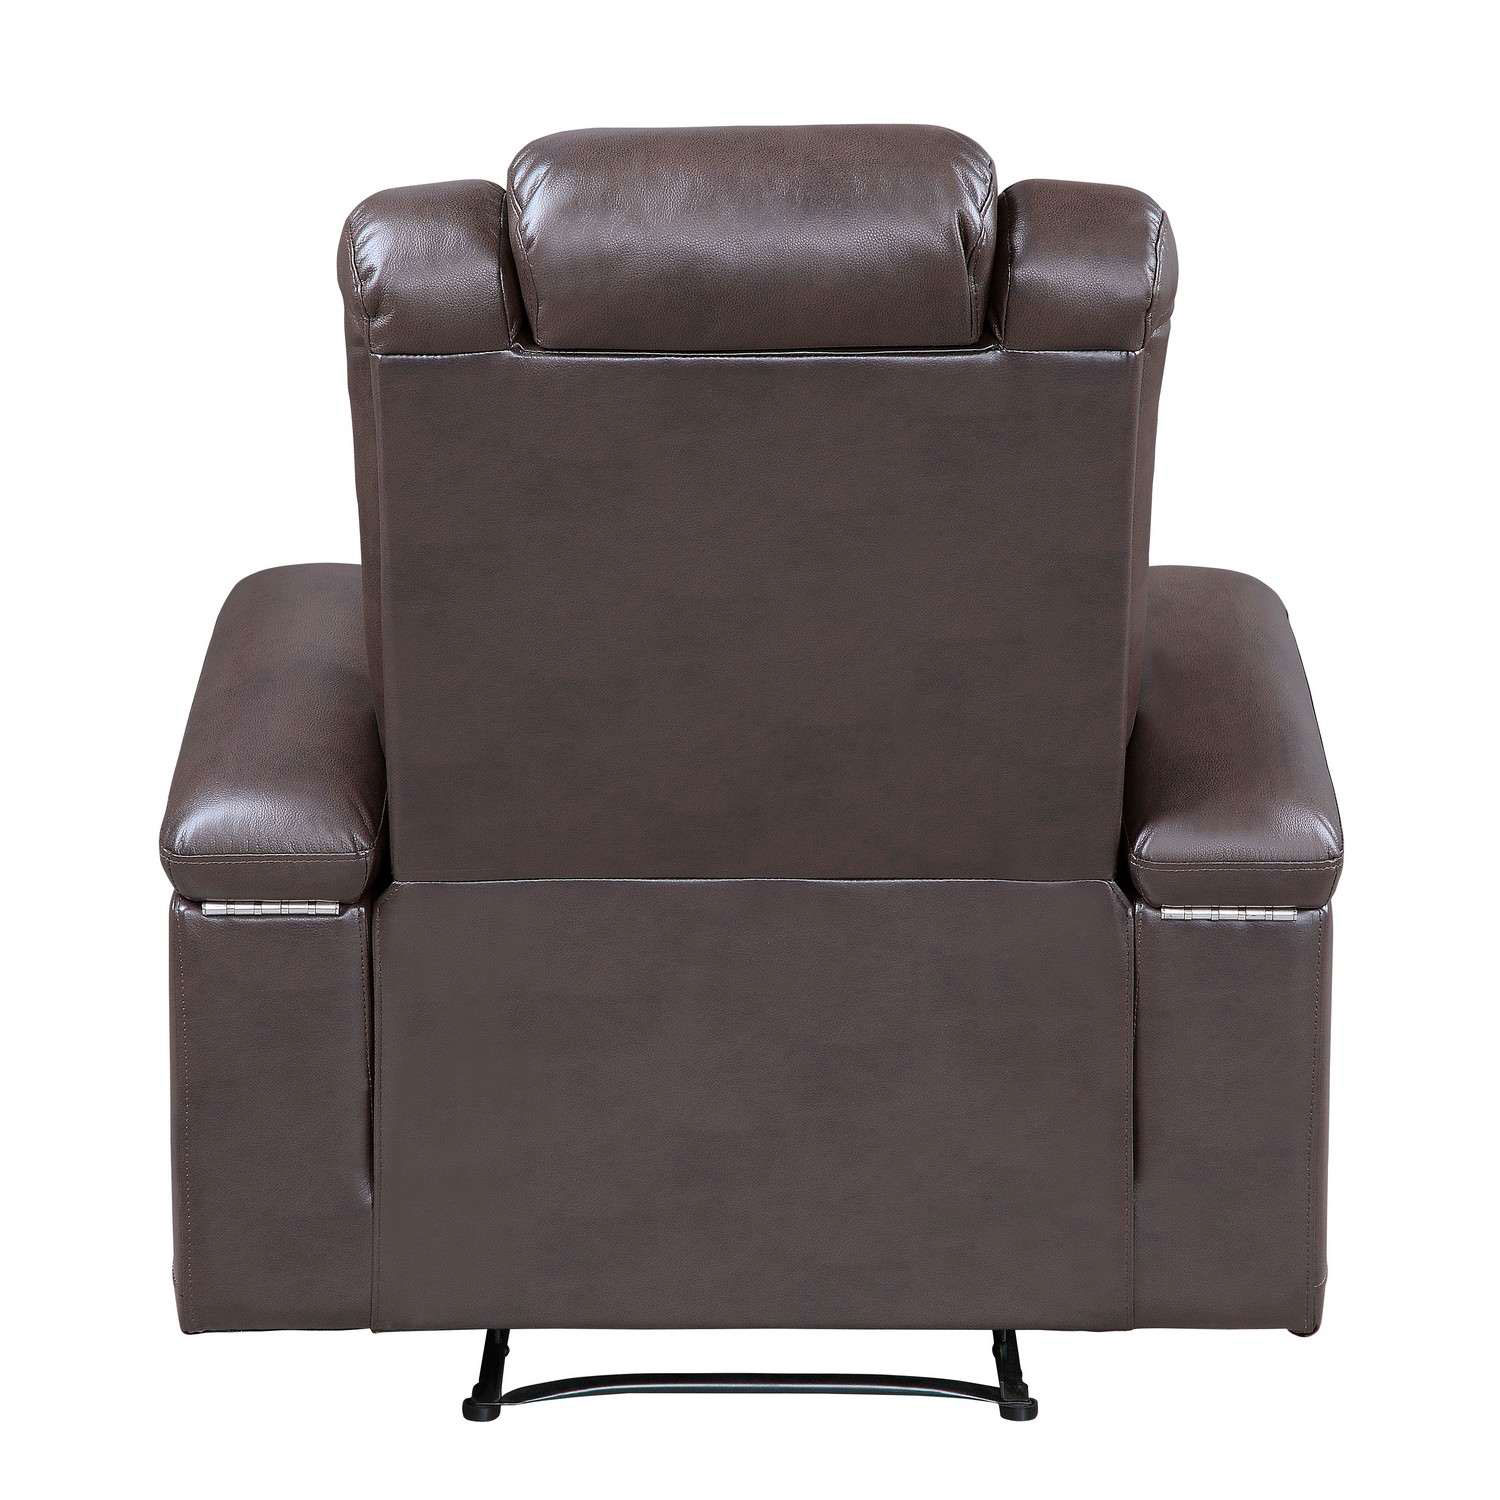 Homelegance Caelan Power Reclining Chair - Dark brown